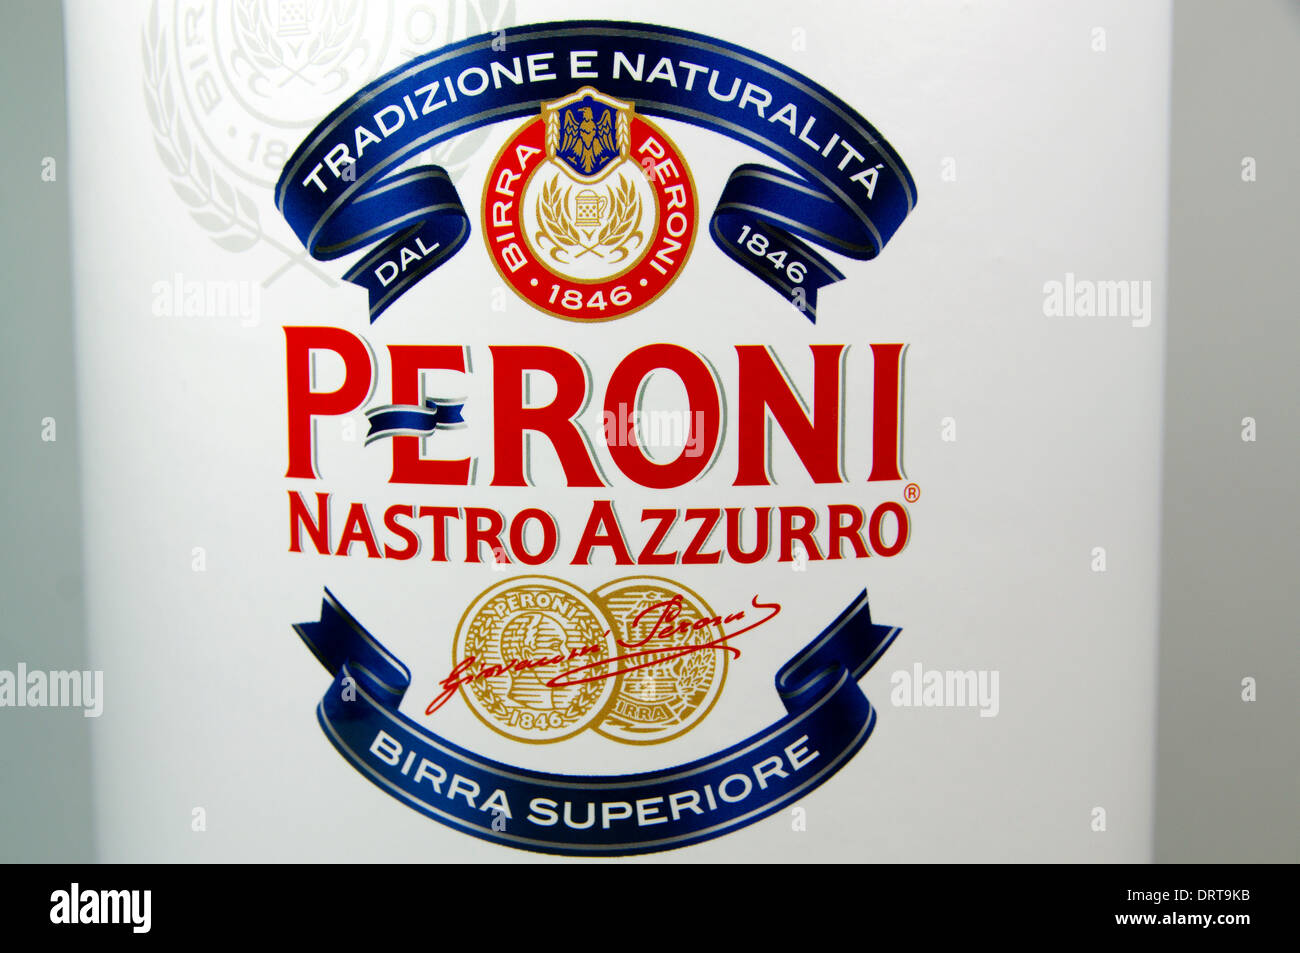 Peroni Italian Beer presentation box. Stock Photo